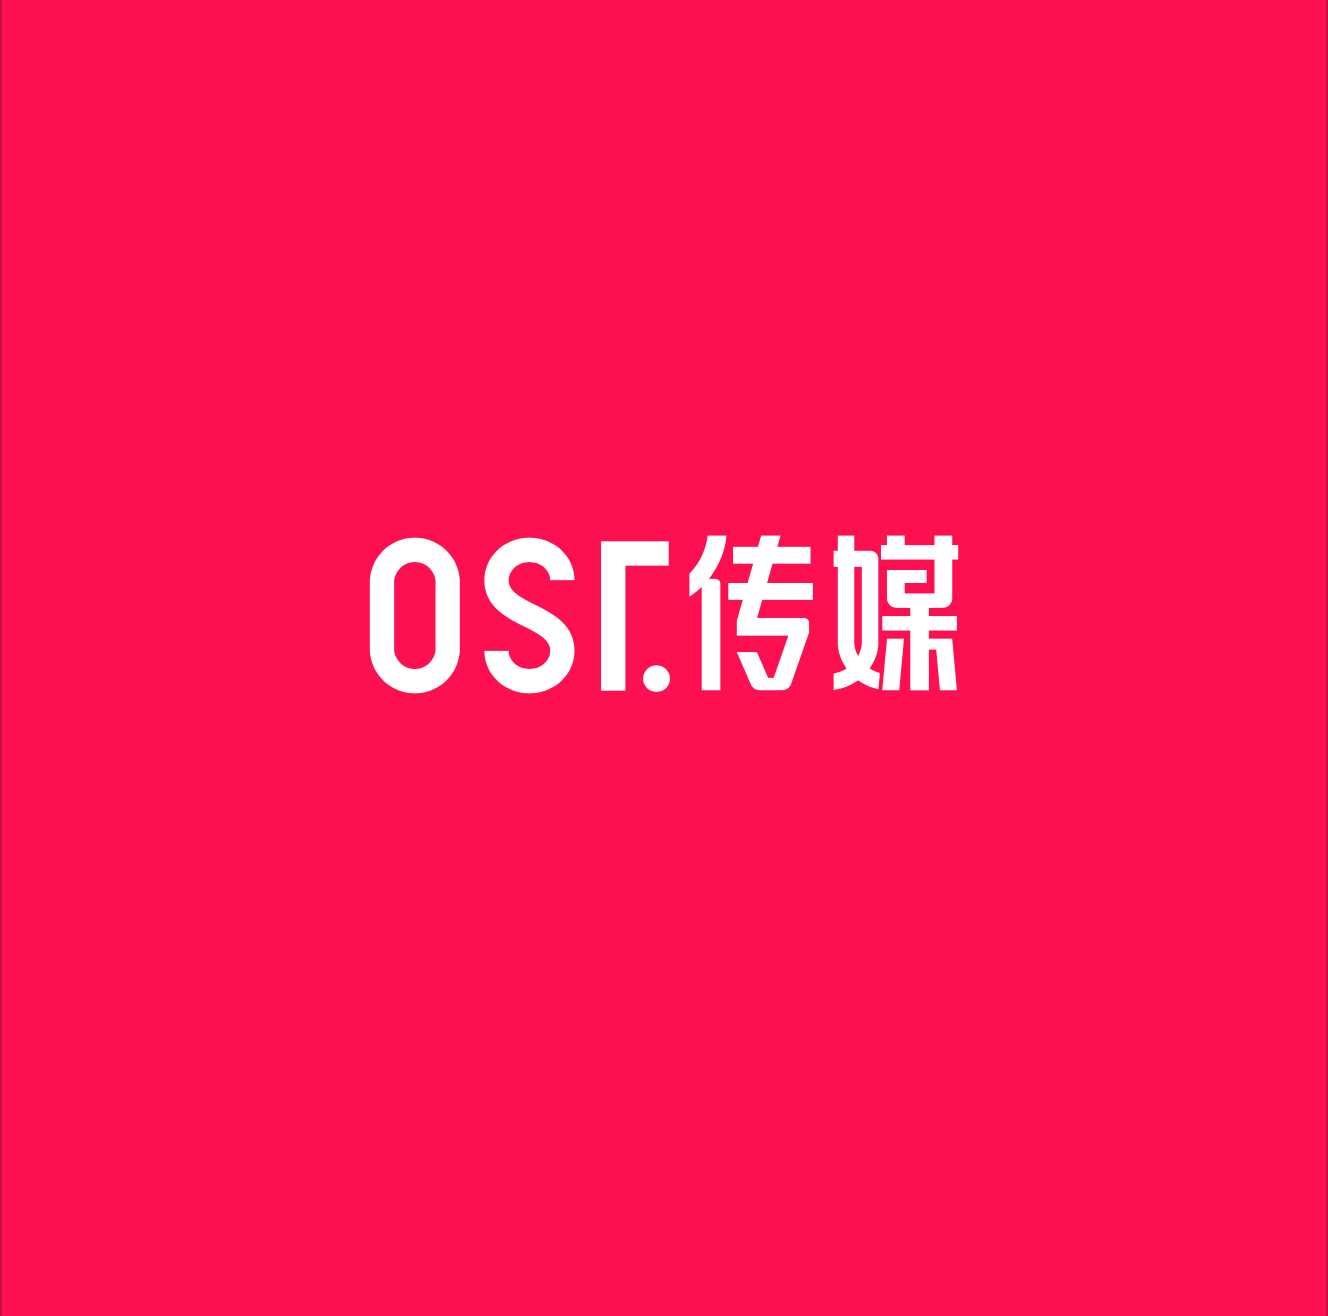 OST传媒【优质MCN机构】寻求优质媒介和品牌方合作